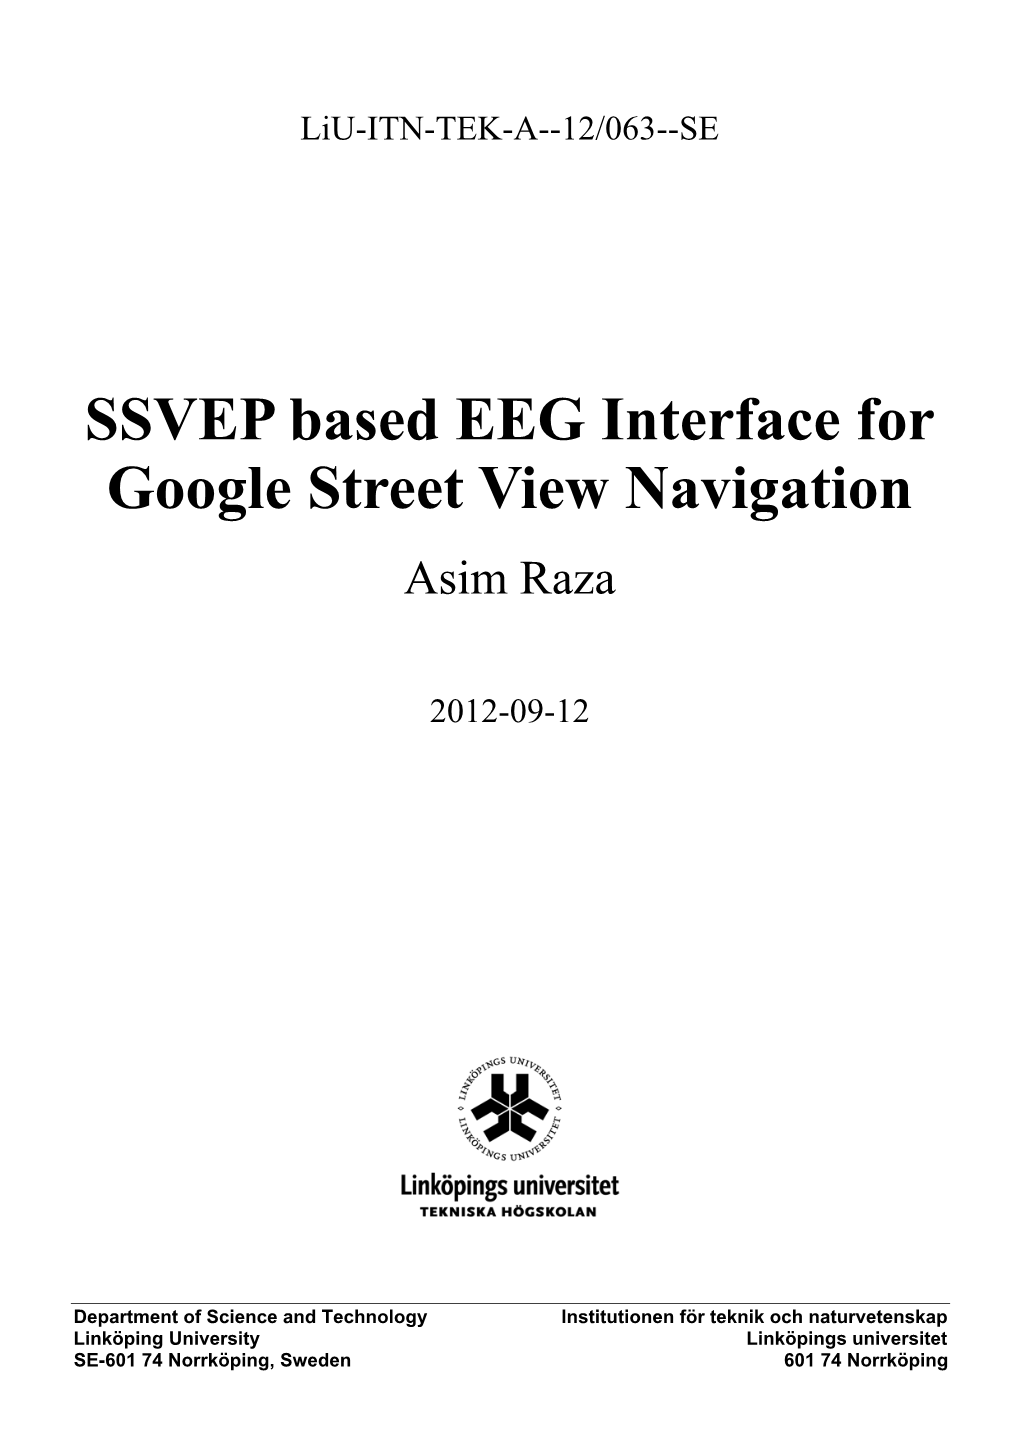 SSVEP Based EEG Interface for Google Street View Navigation Asim Raza